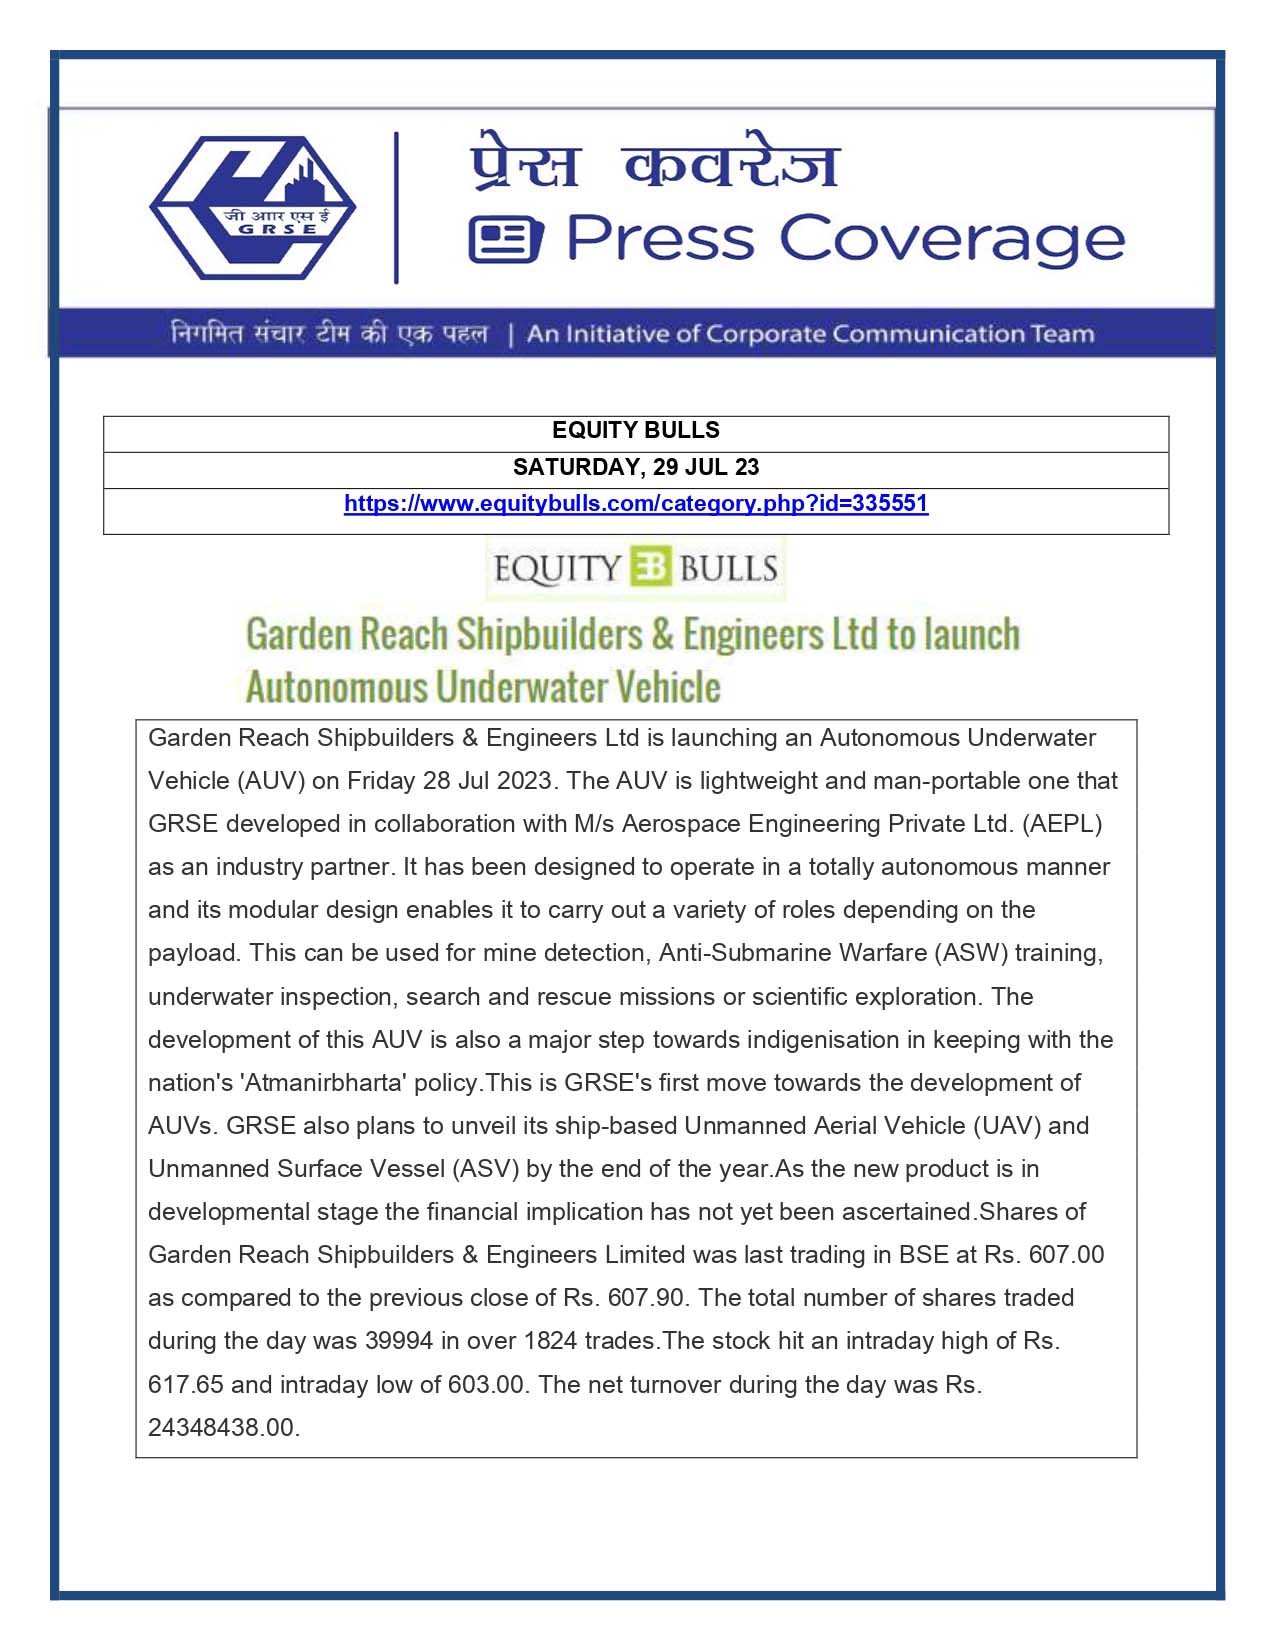 Press Coverage : Equity Bulls, 29 Jul 23 : Garden Reach Shipbuilders & Engineers Ltd to launch Autonomous Underwater Vehicle